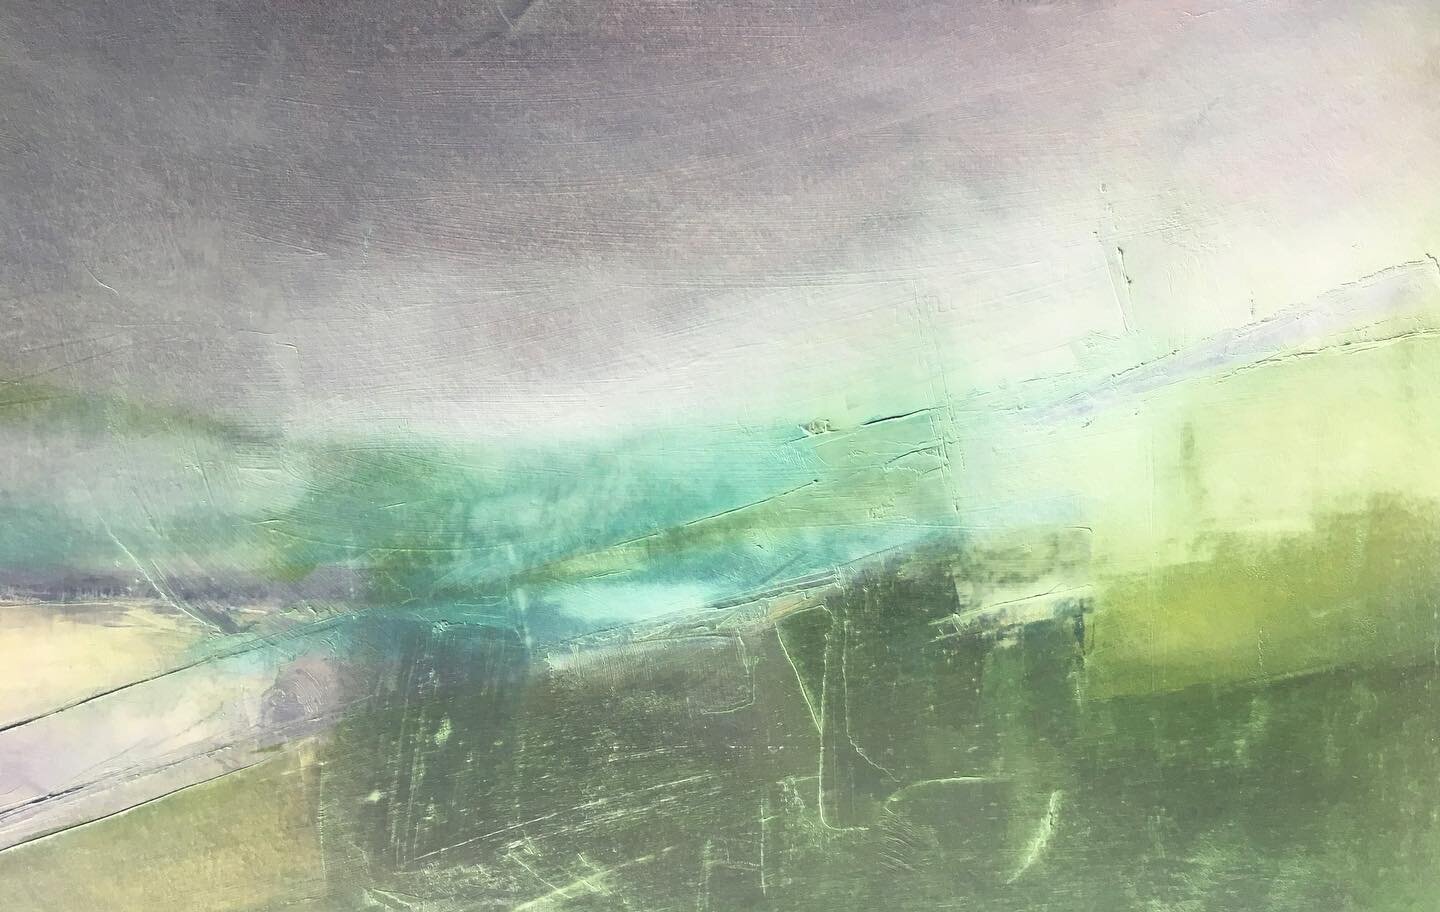 Somerset Landscape. Misty Day. Lifts the spirit...Oil on board 51x76cm. 
More on my website: 
www.louise-holgate.com
#buyartonline
#abstractmag  #highgateart  #janenewberydulwich #chelseaartsclub #affordableartfairuk #somerset #colour #light #abstrac